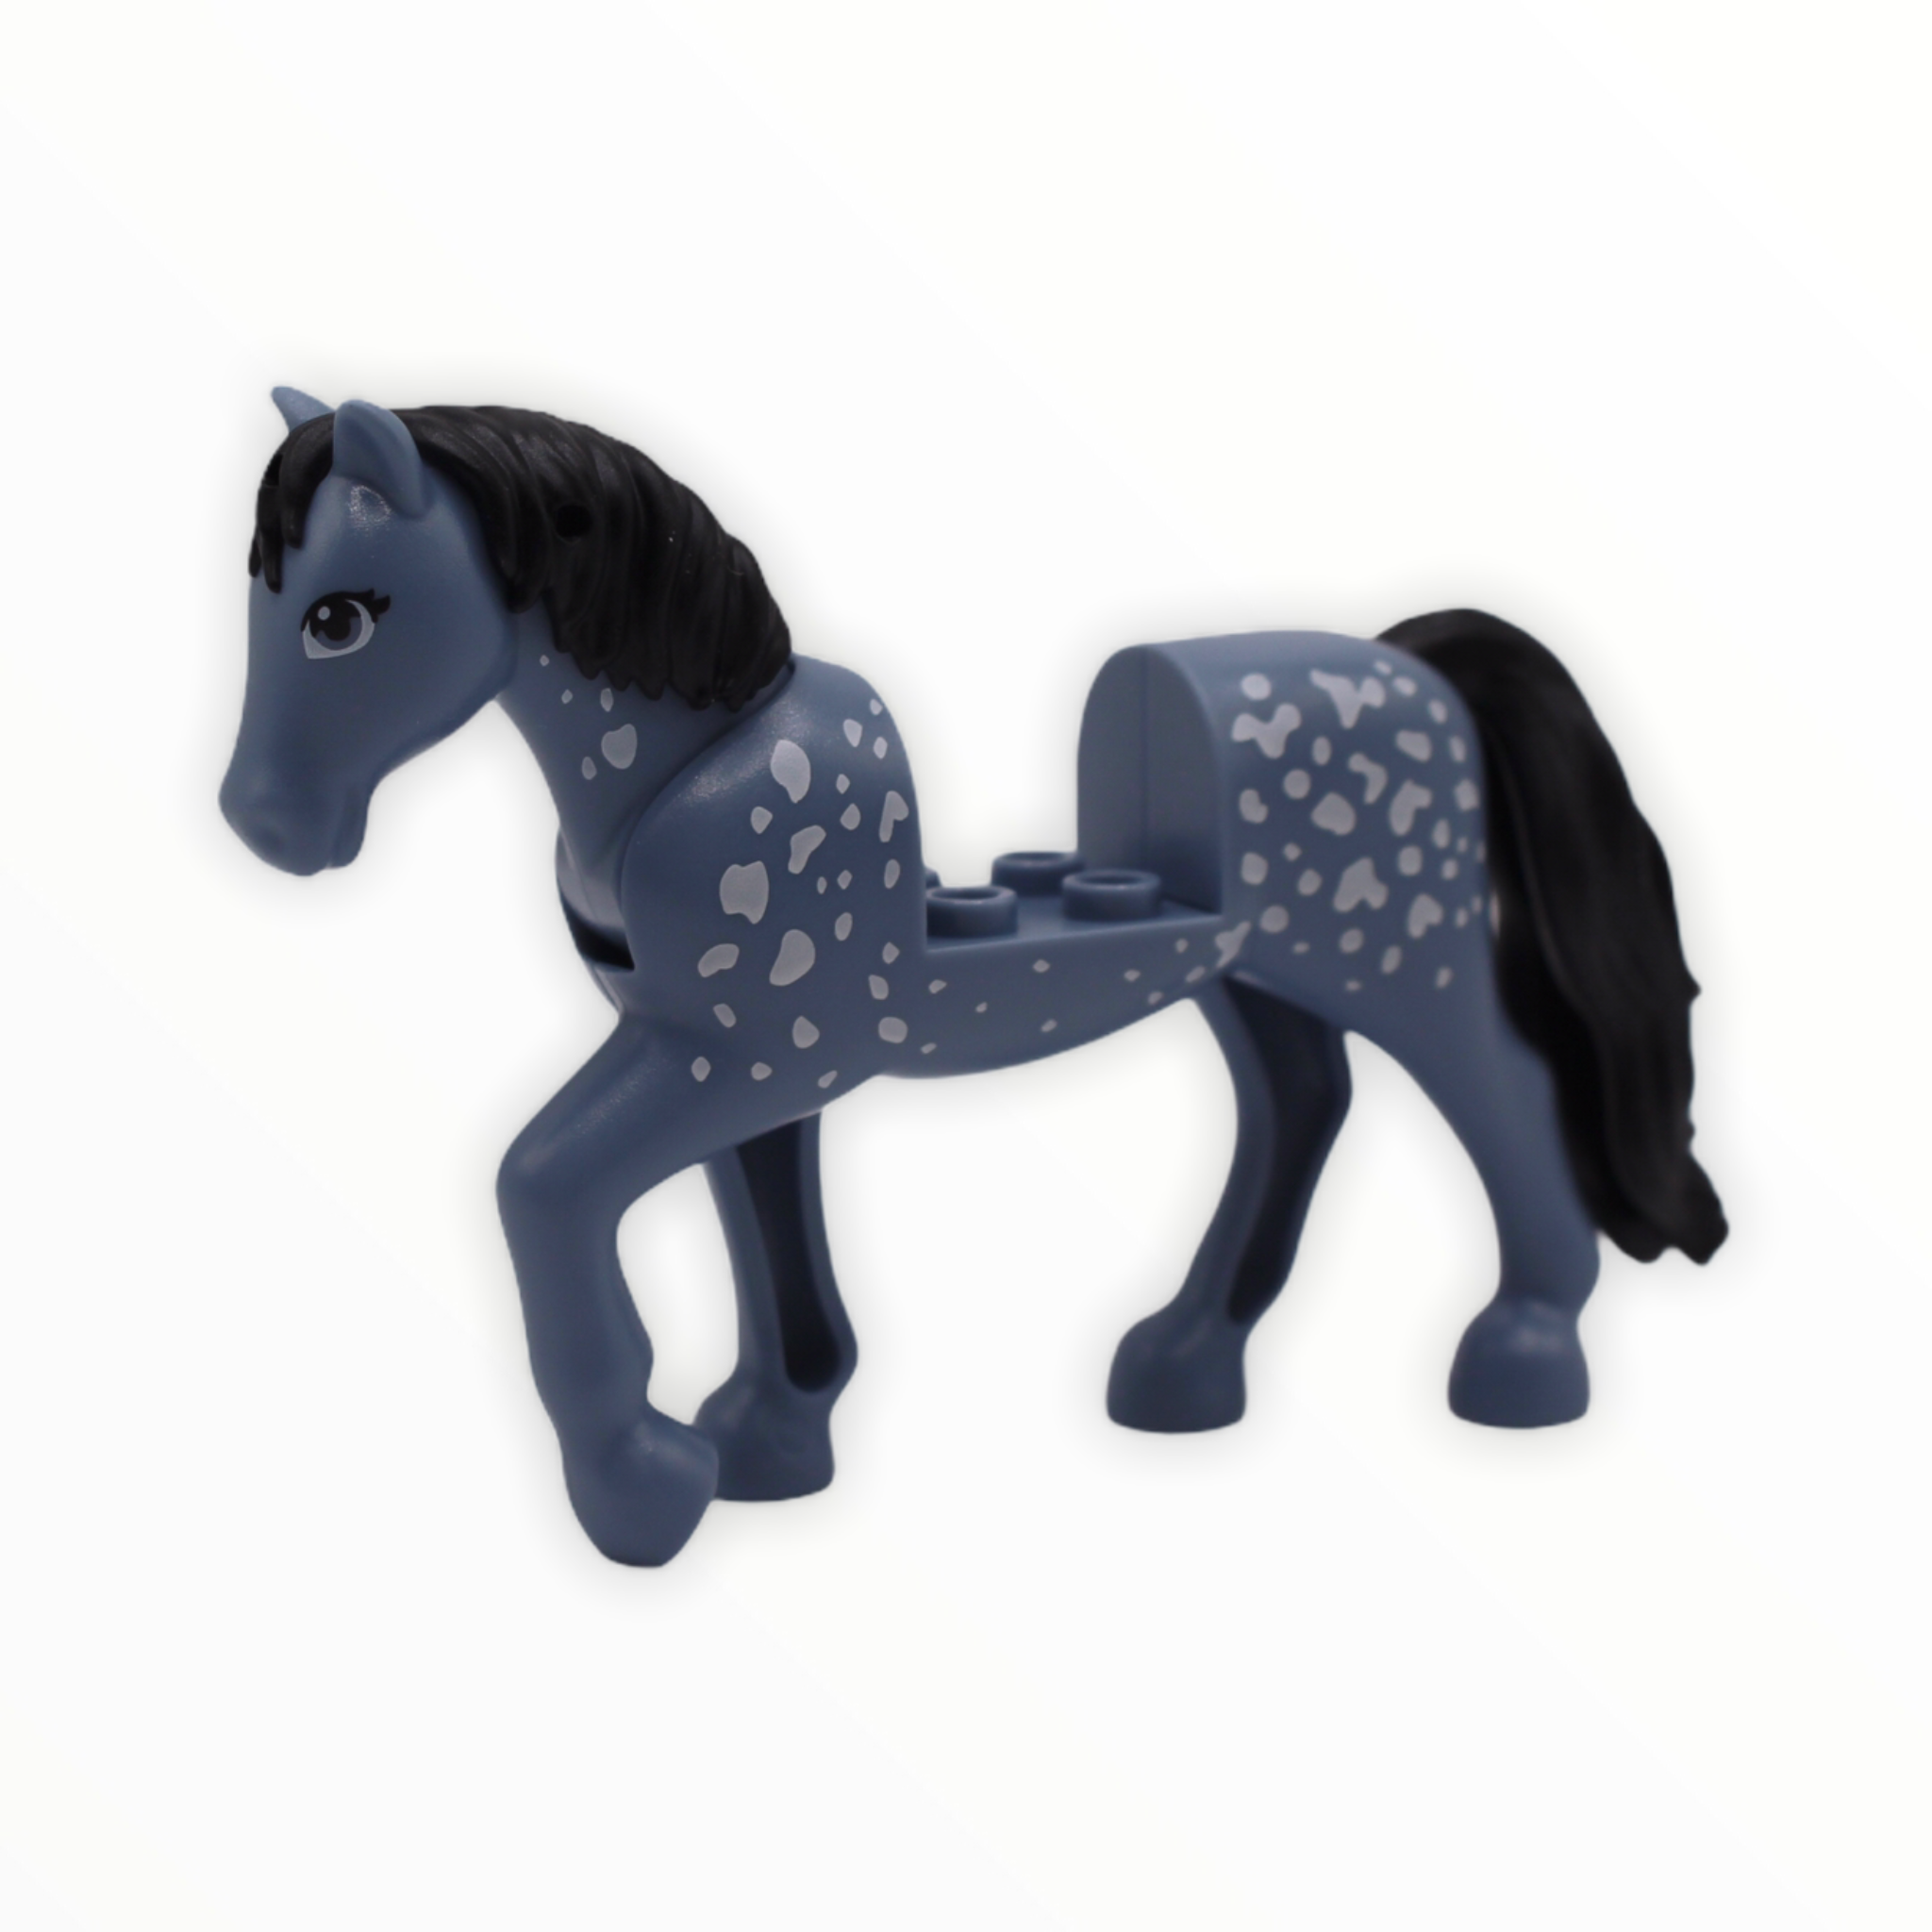 Dark Blue Horse with White Spots (Friends, 2021)